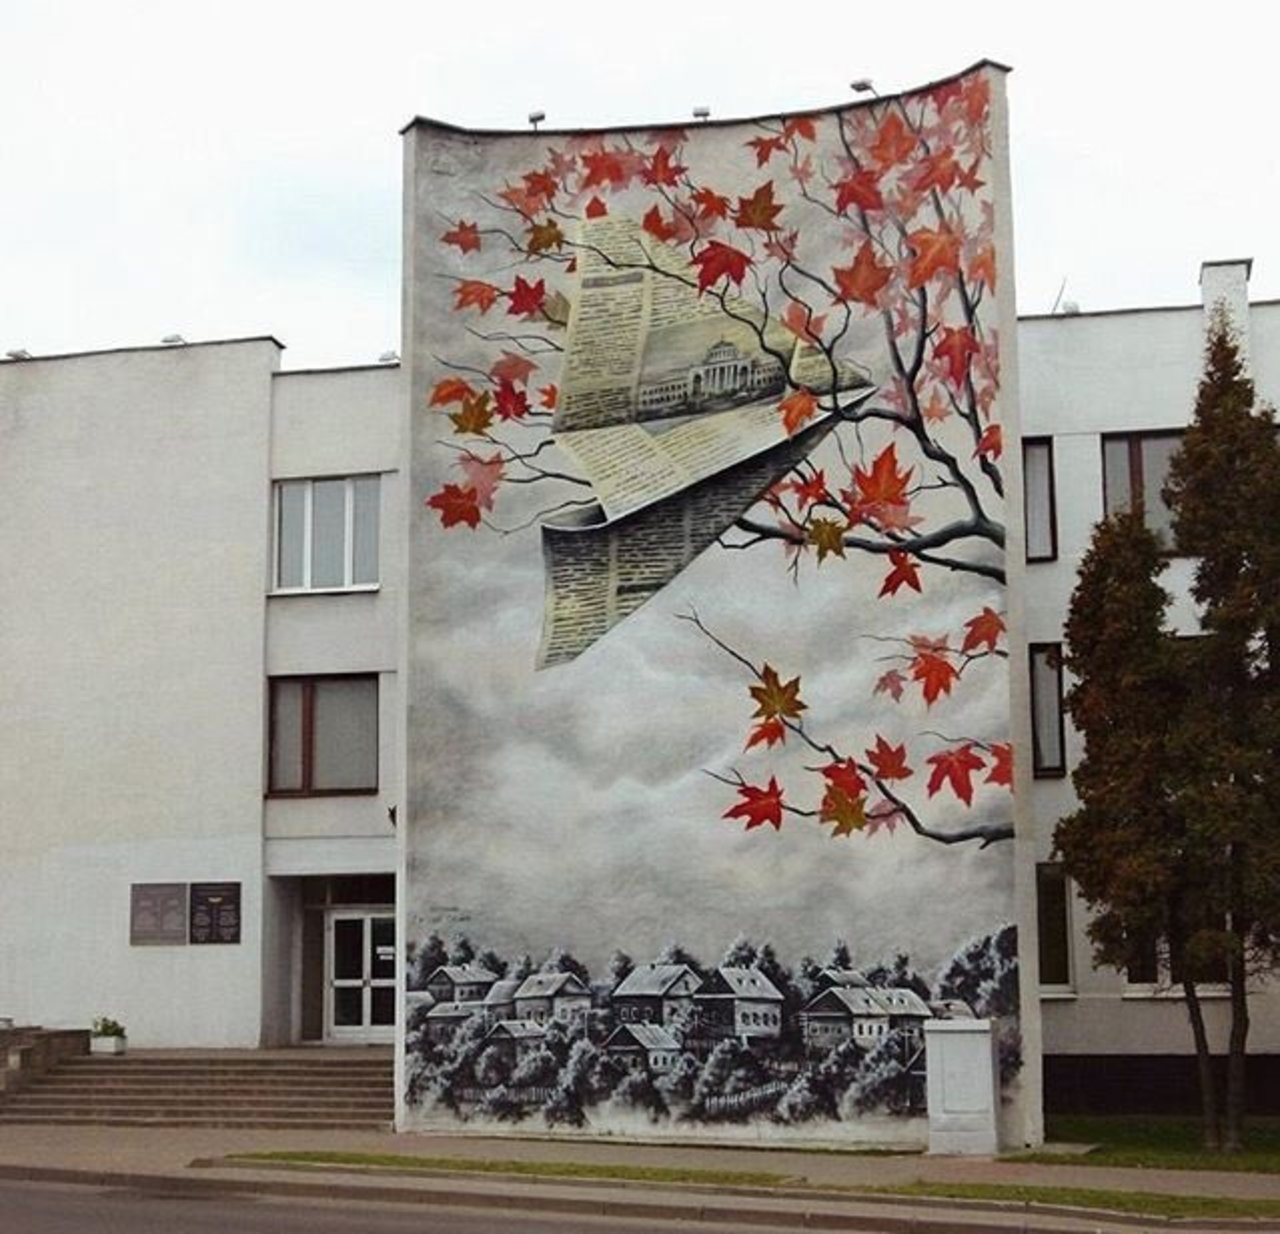 New Street Art by MUTUS in Belarus 

#art #graffiti #mural #streetart https://t.co/50Uobzc7Kt